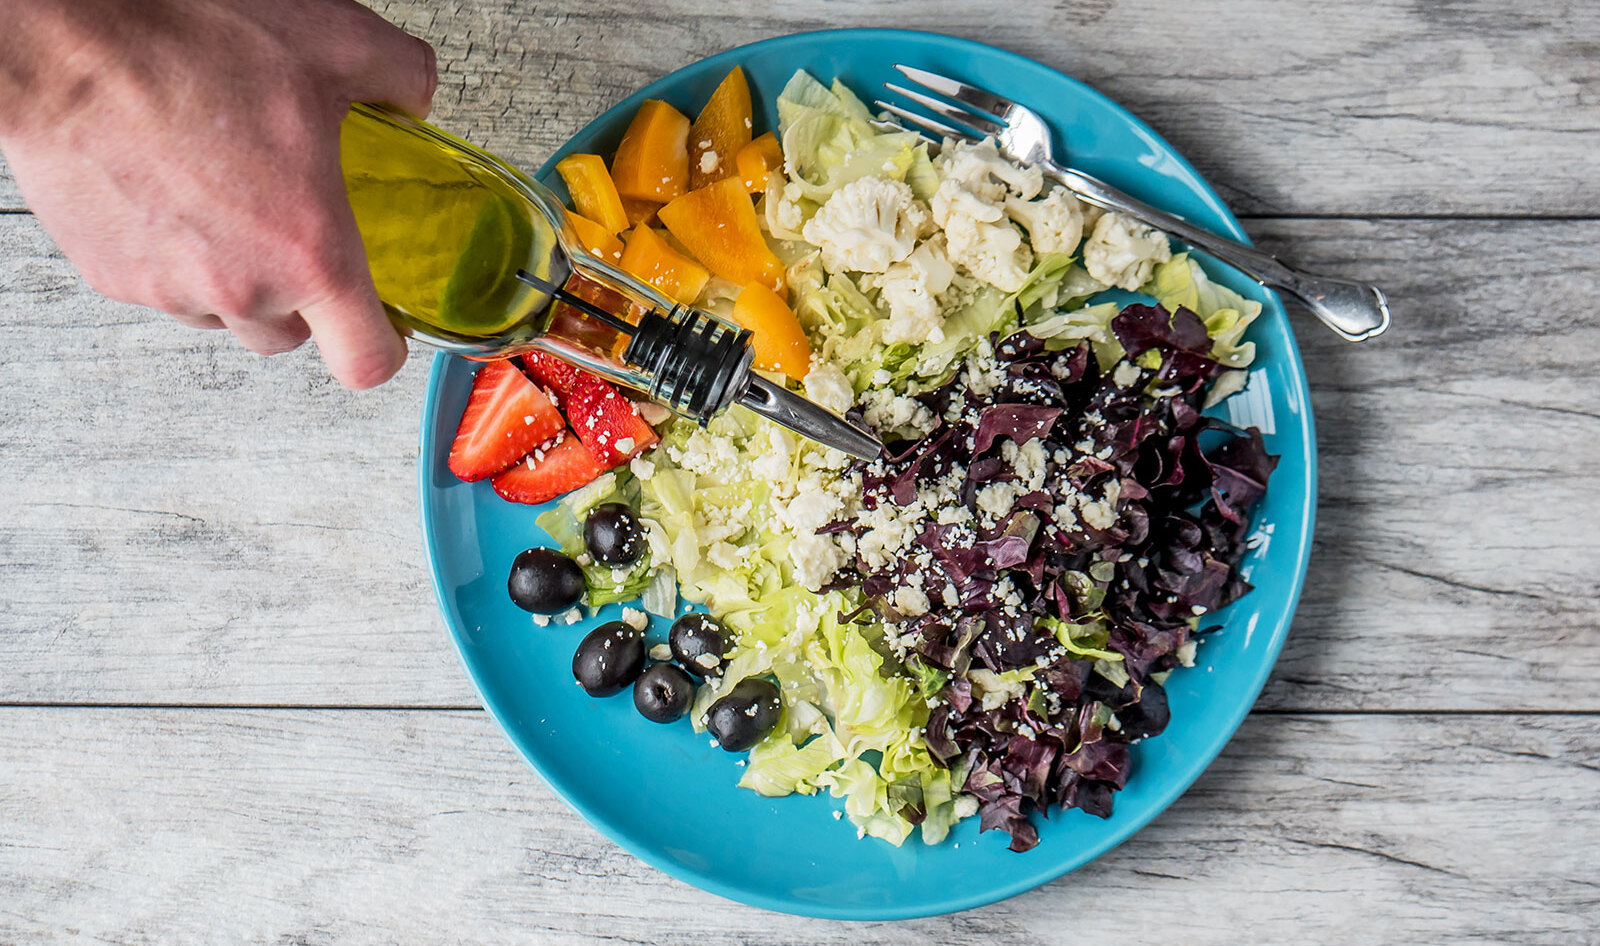 Vegan Diet 44 Percent Better for the Environment Than Mediterranean Diet, Study Finds